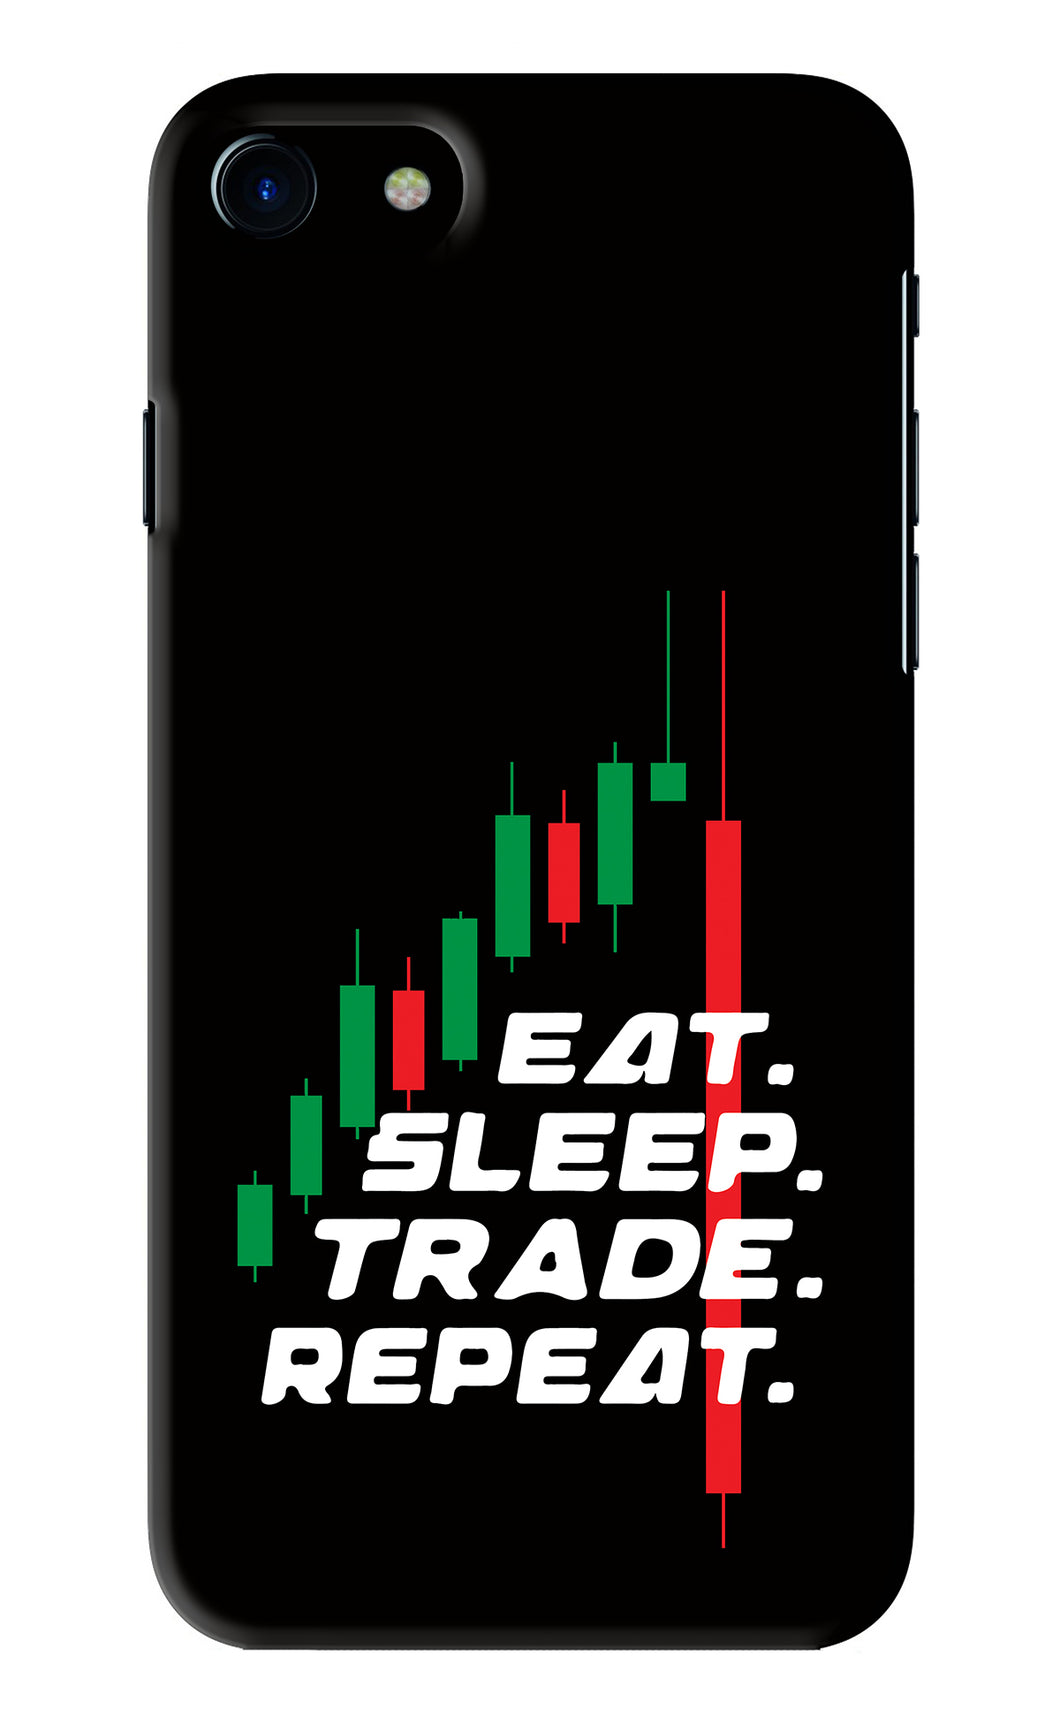 Eat Sleep Trade Repeat iPhone 7 Back Skin Wrap